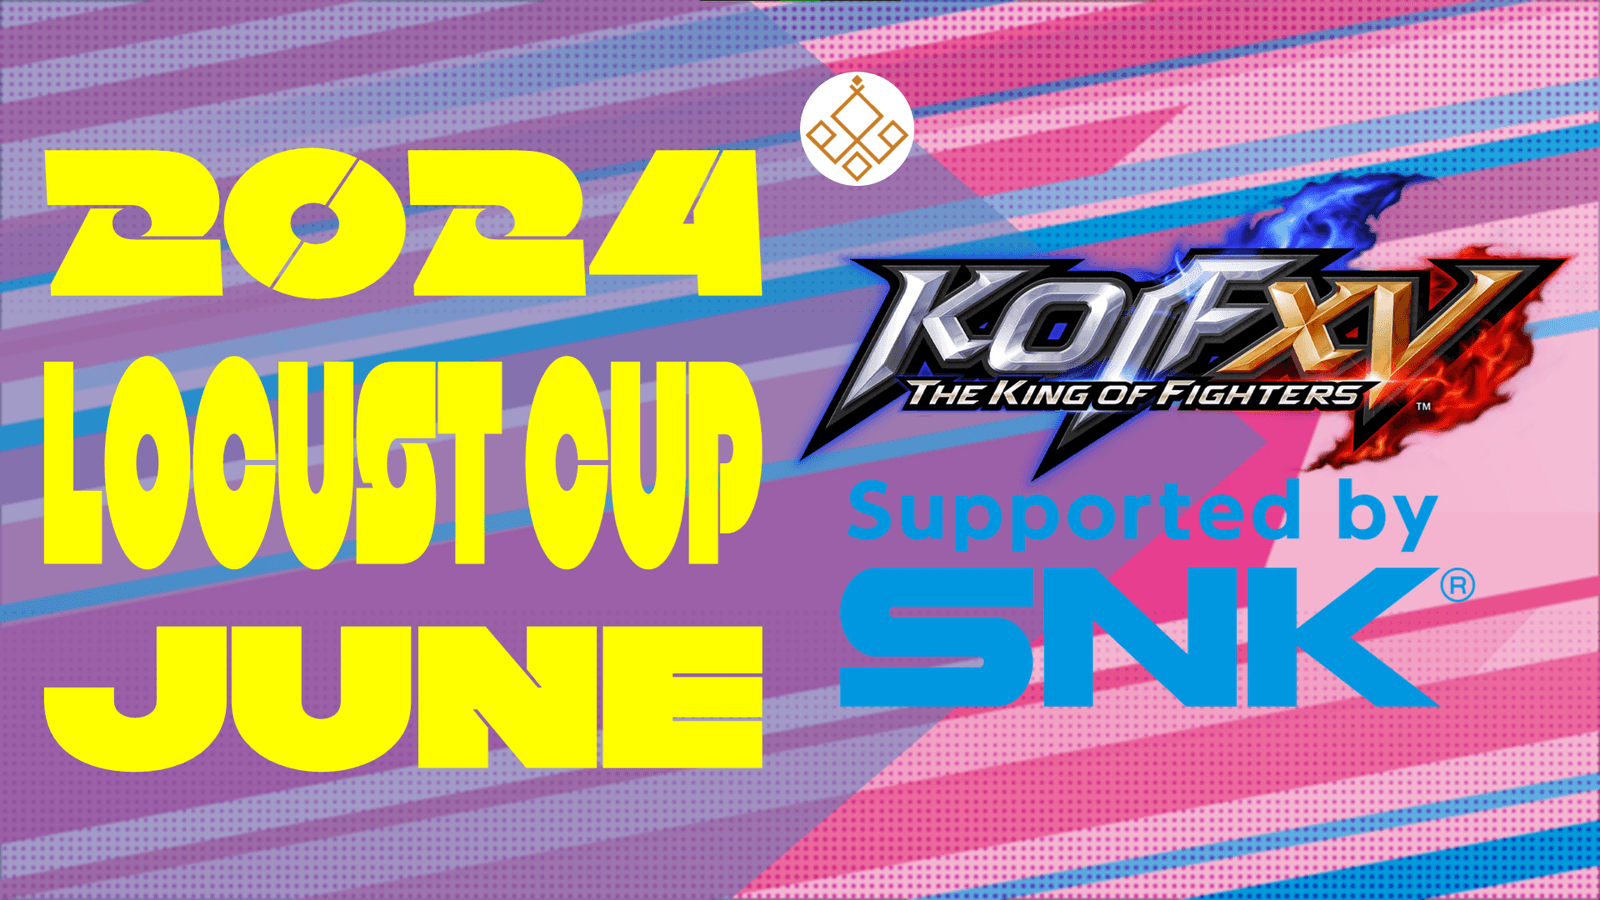 Locust杯 -KOF15 6月期-【2024】 feature image